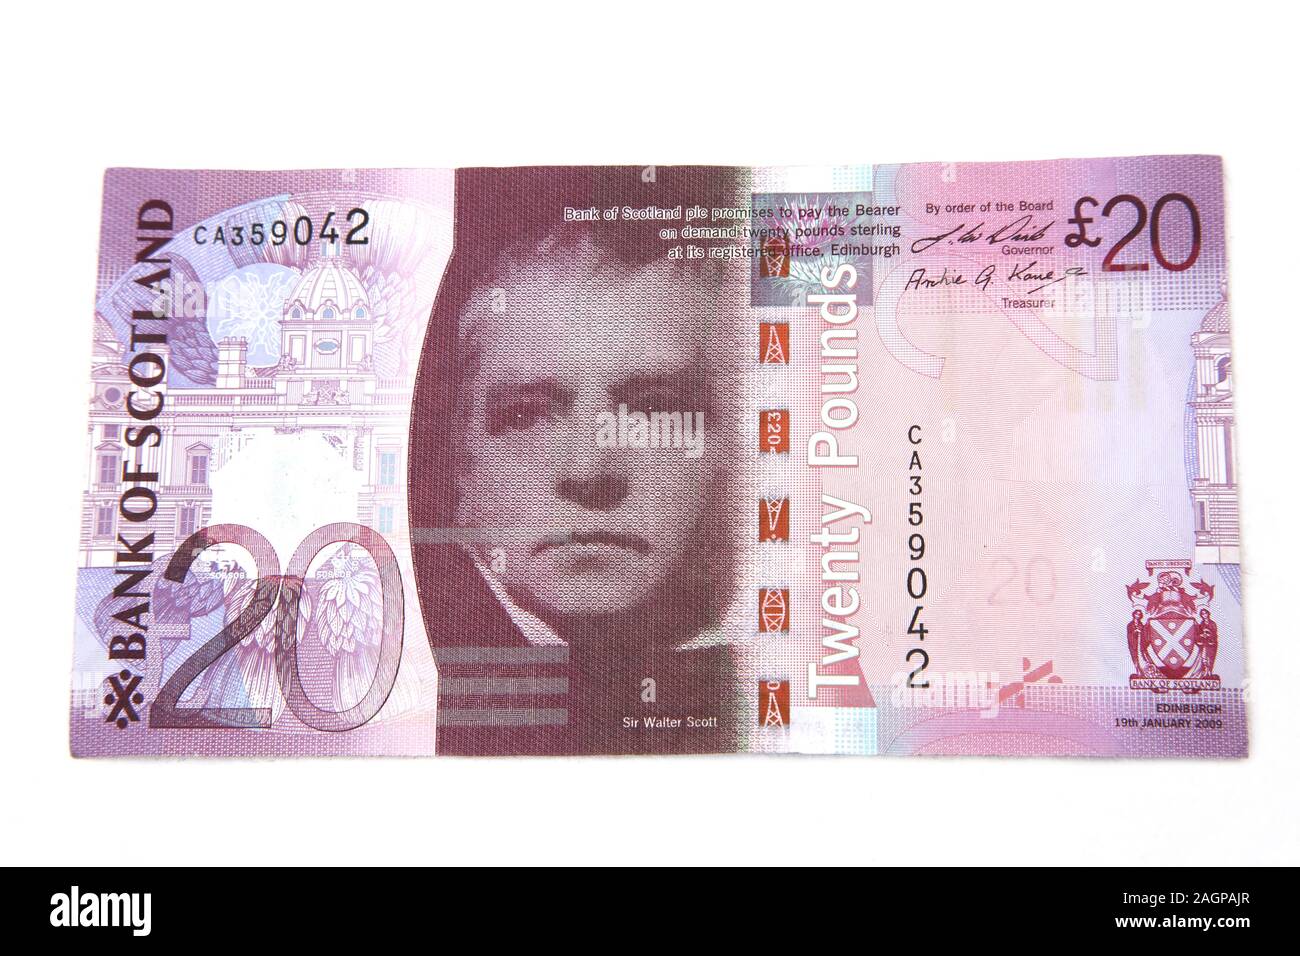 Sir Walter Scott sur l'avers de la Bank of Scotland Note de 20 livres Banque D'Images